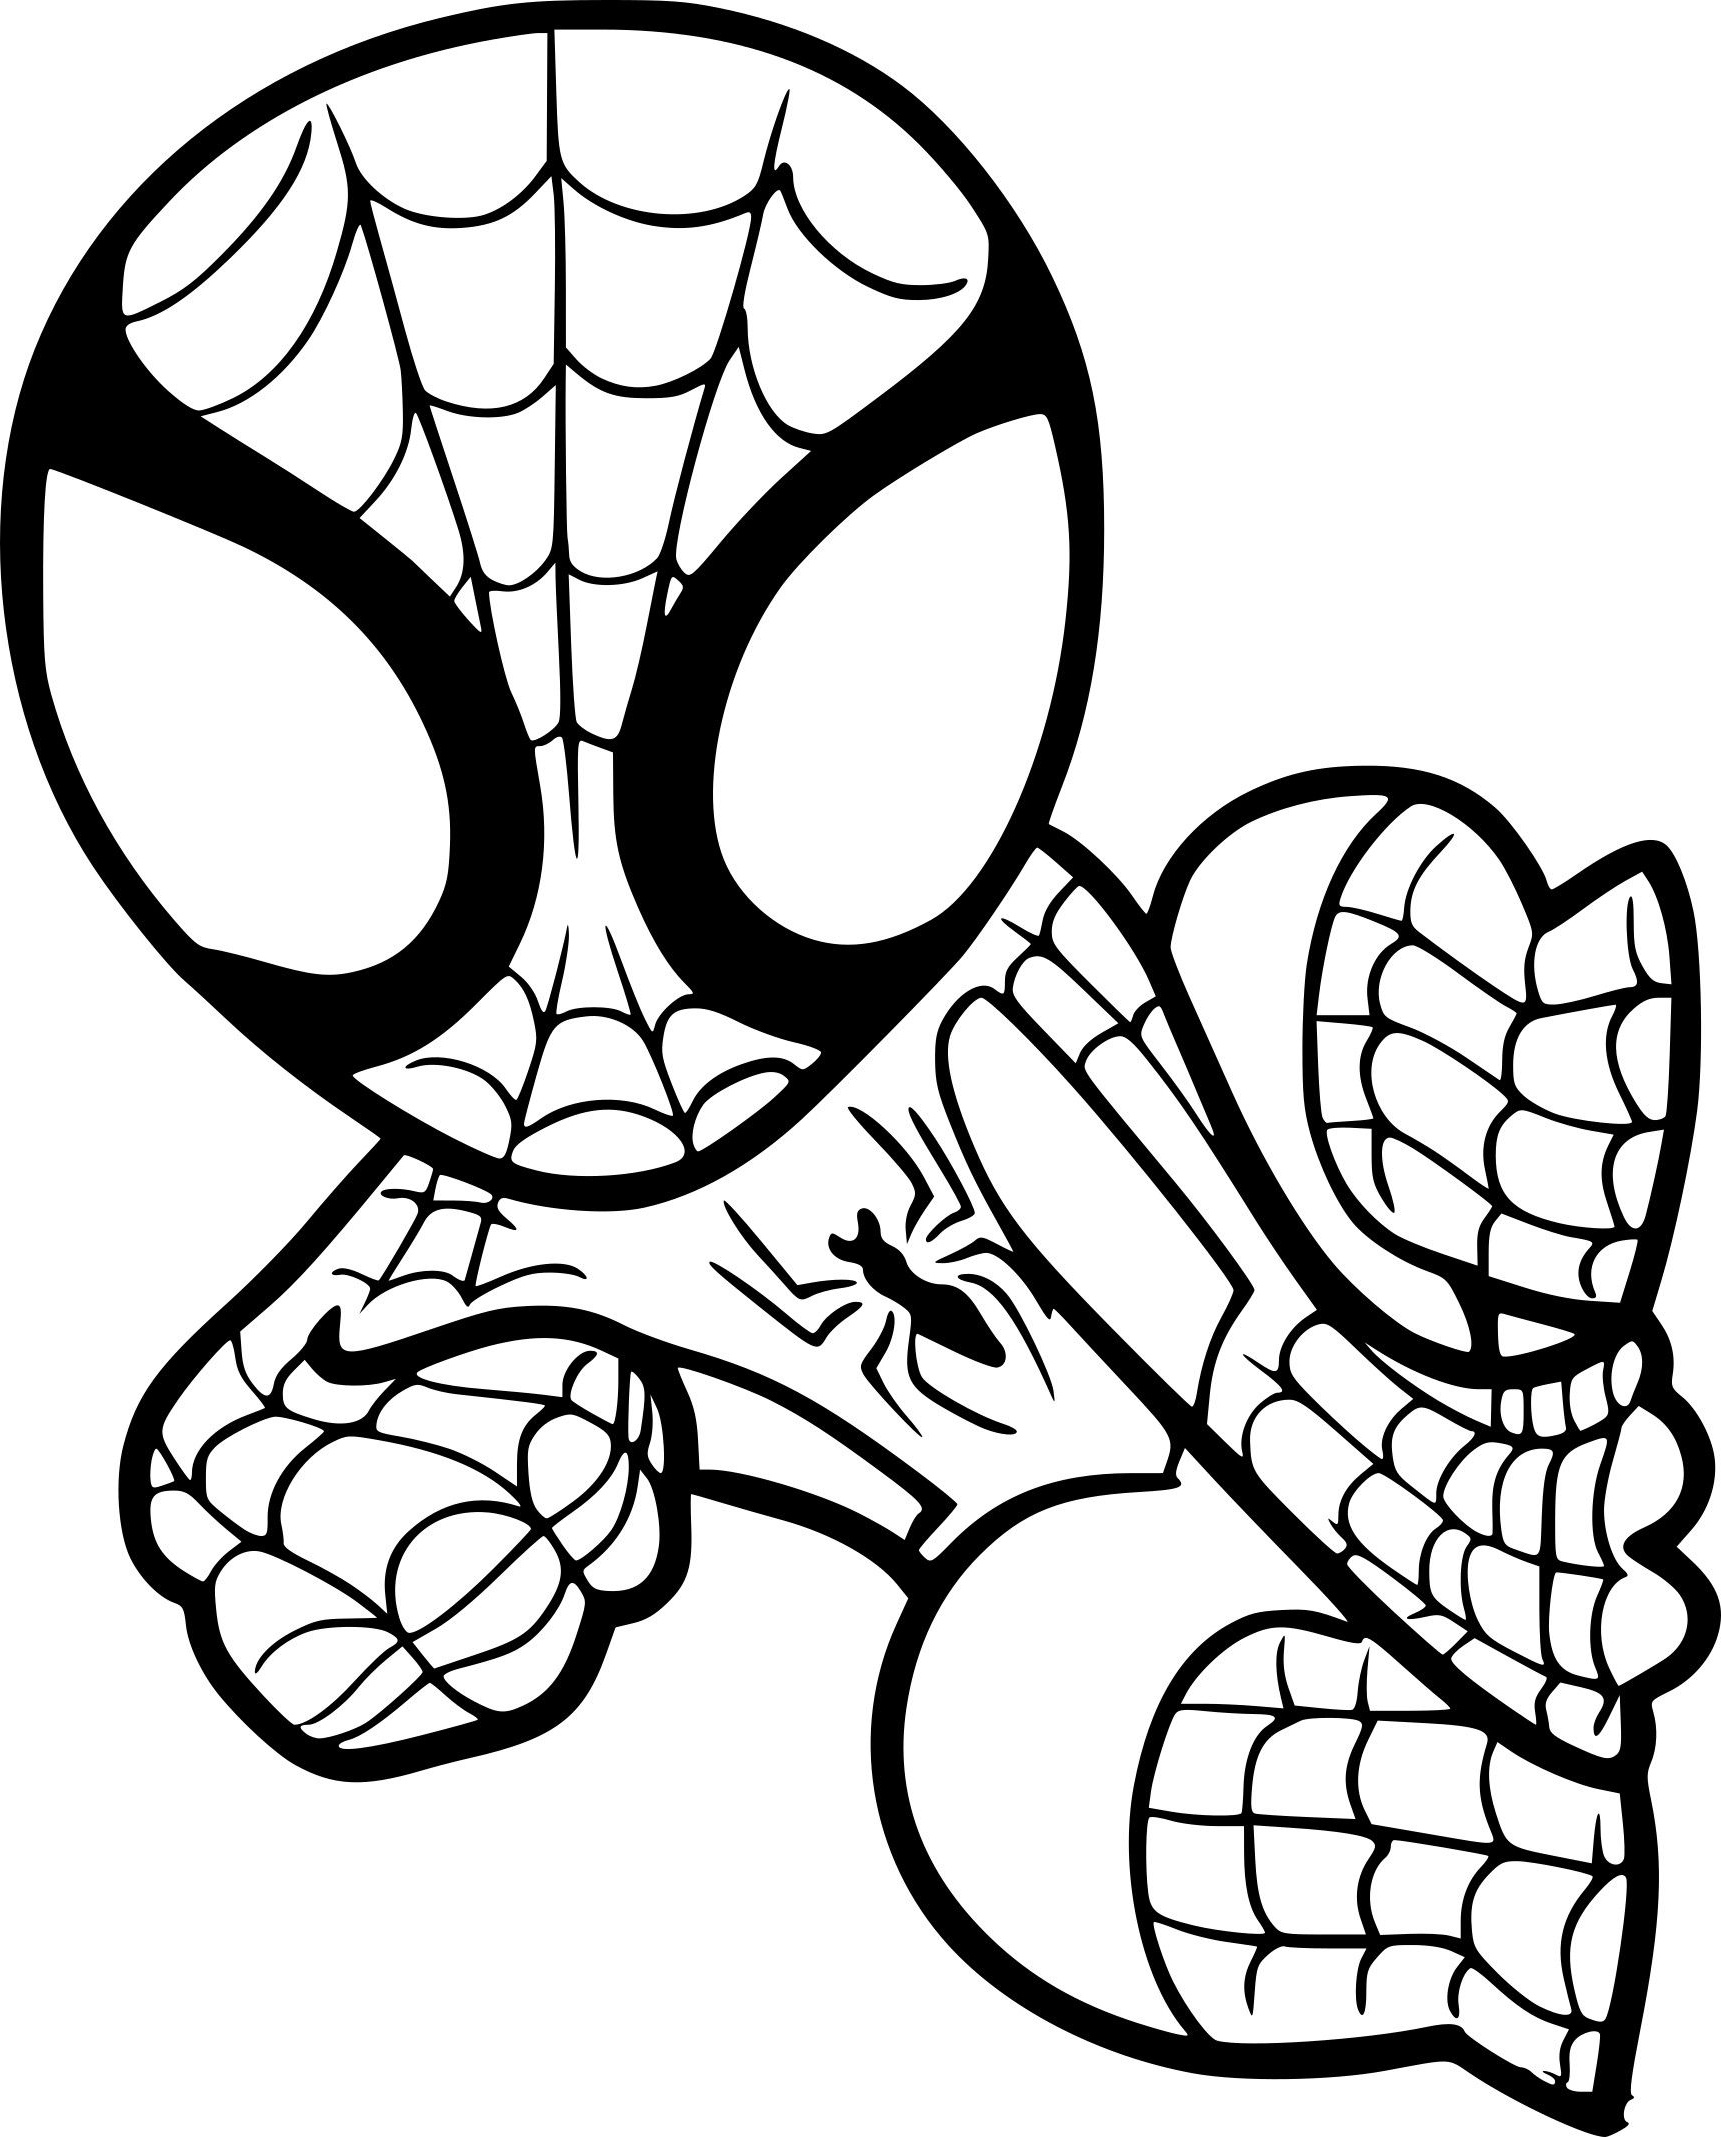 Coloriage Spiderman à Imprimer Bestof Photos Coloriage Spiderman Facile À Imprimer Sur Coloriages